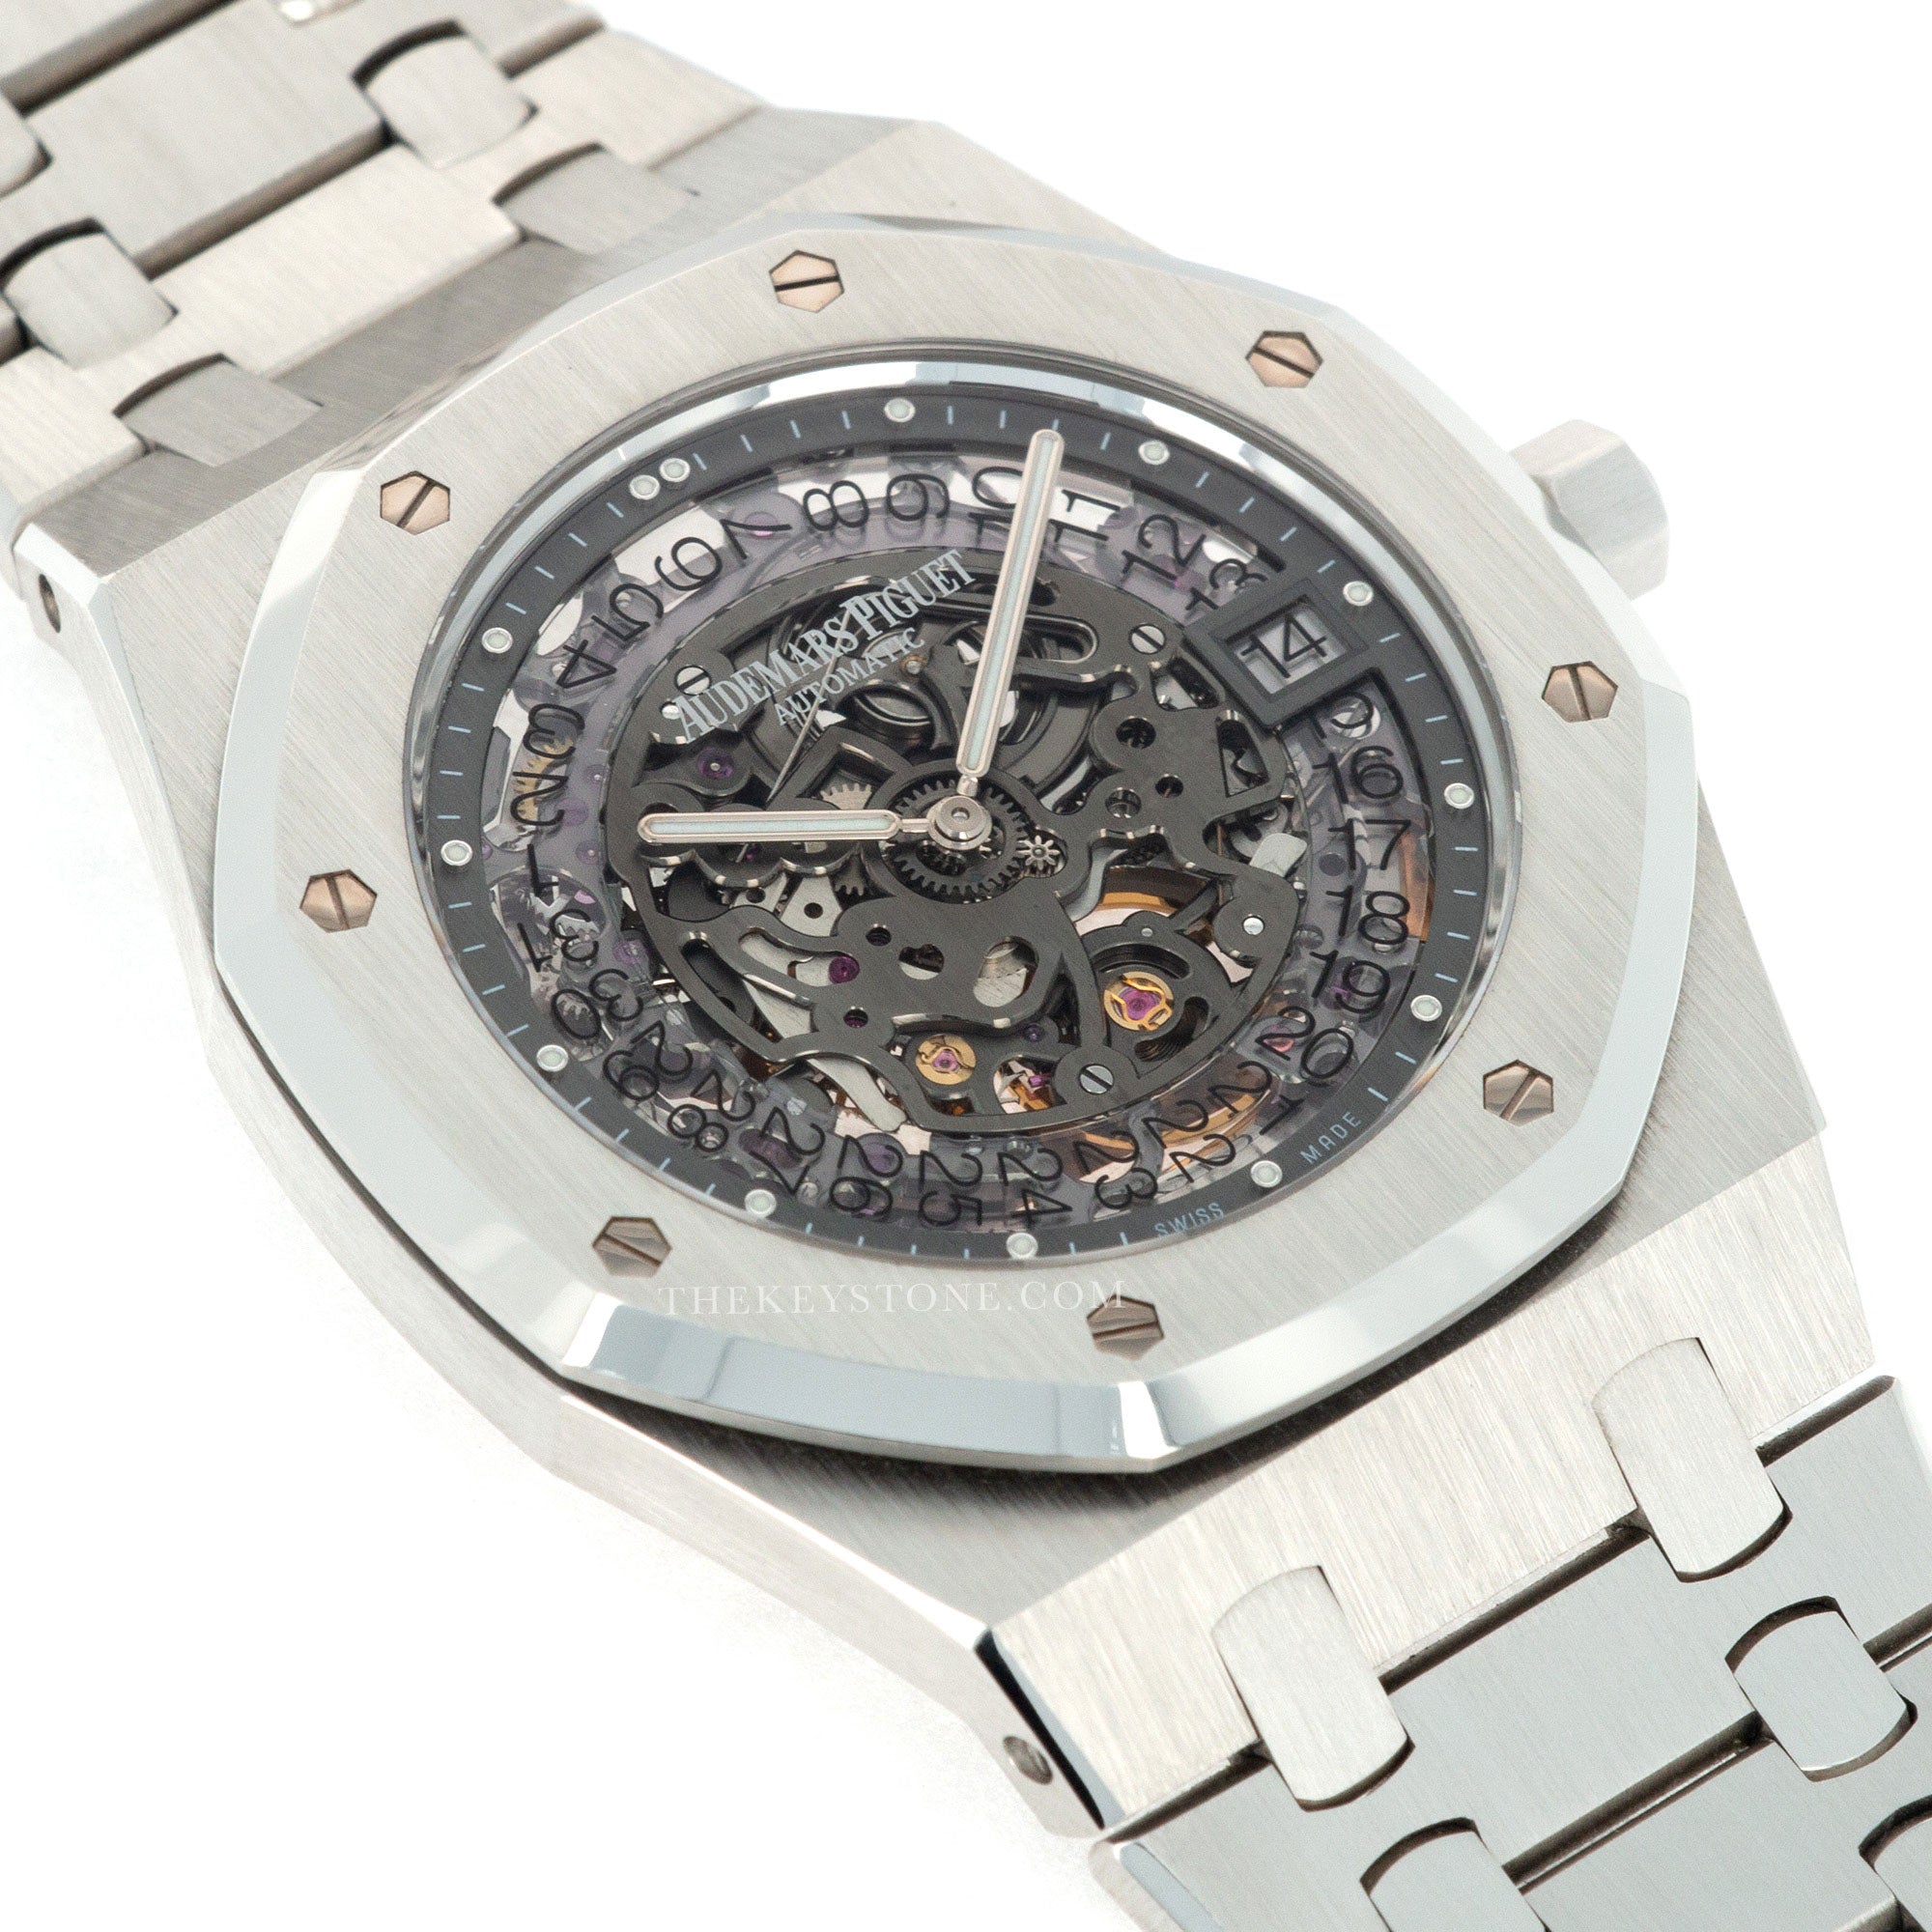 Audemars Piguet - Audemars Piguet Royal Oak Platinum Skeletonized Watch, Ref. 15203 - The Keystone Watches